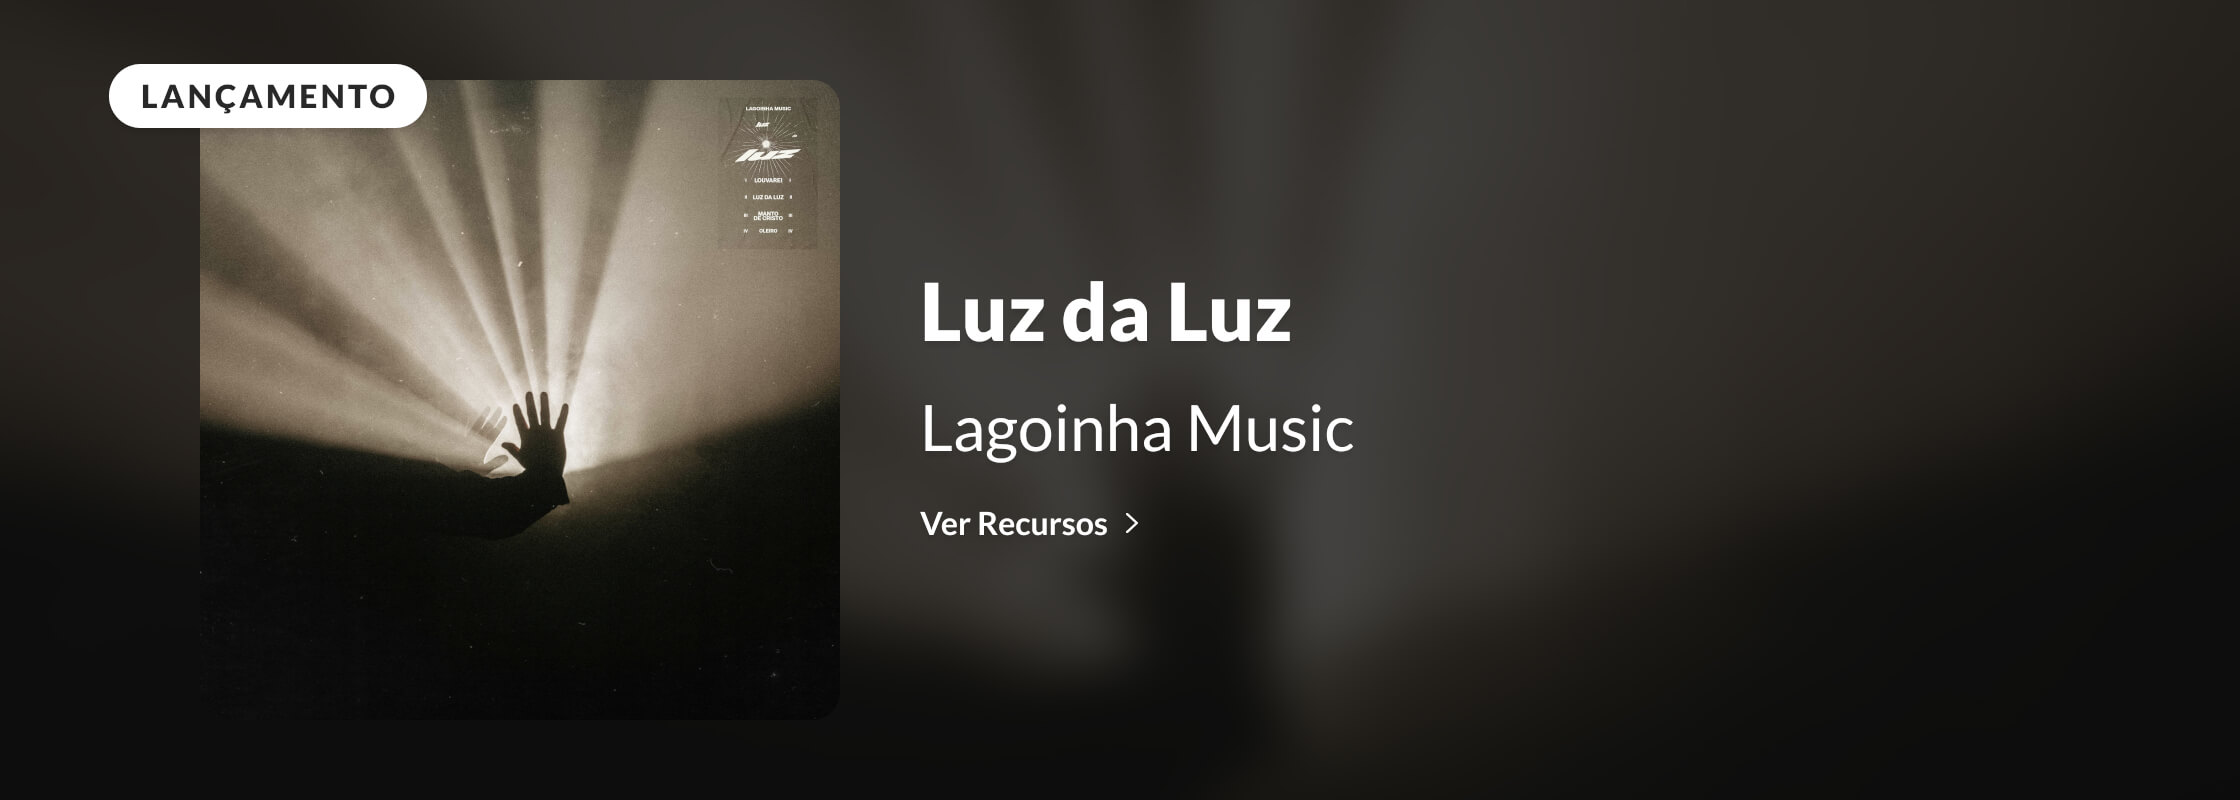 Lagoinha Music